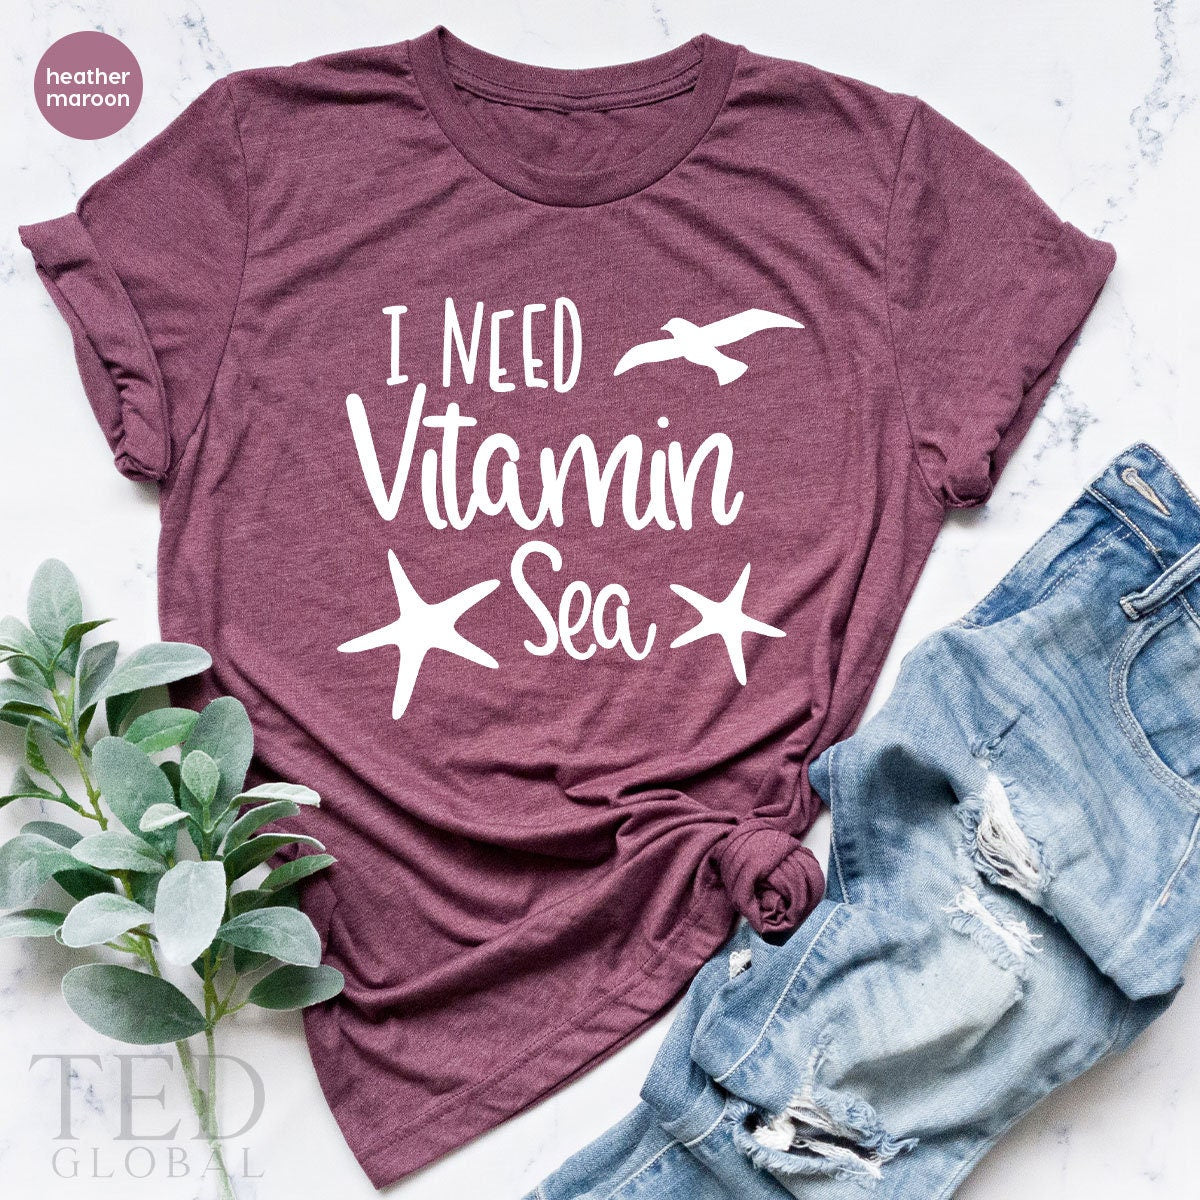 Summer TShirt, Beach Lover Shirt, I Need Vitamin Sea Shirt, Summertime Shirt, Girls Trip T Shirts, Family Vacation Shirt, Vitamin C T-Shirt - Fastdeliverytees.com